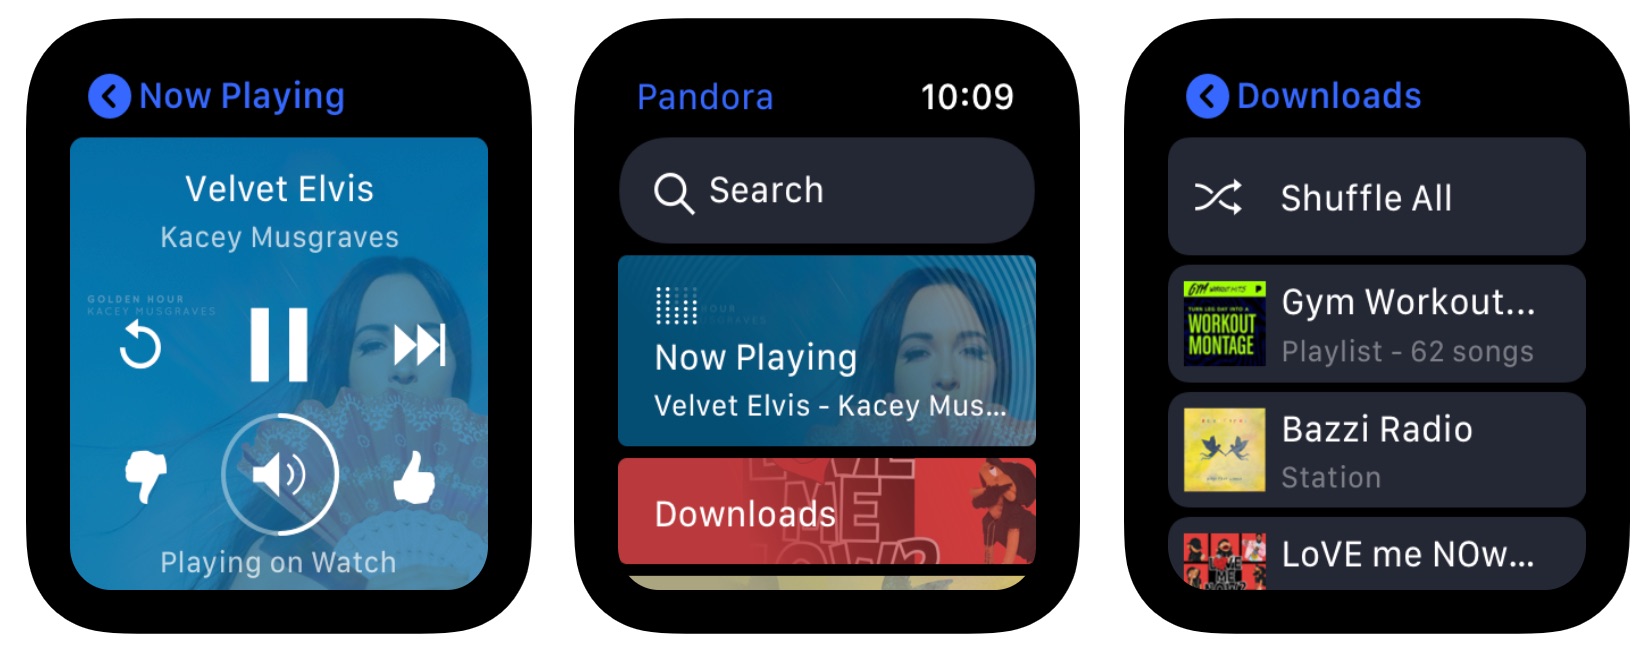 Pandora Music on the Apple Watch